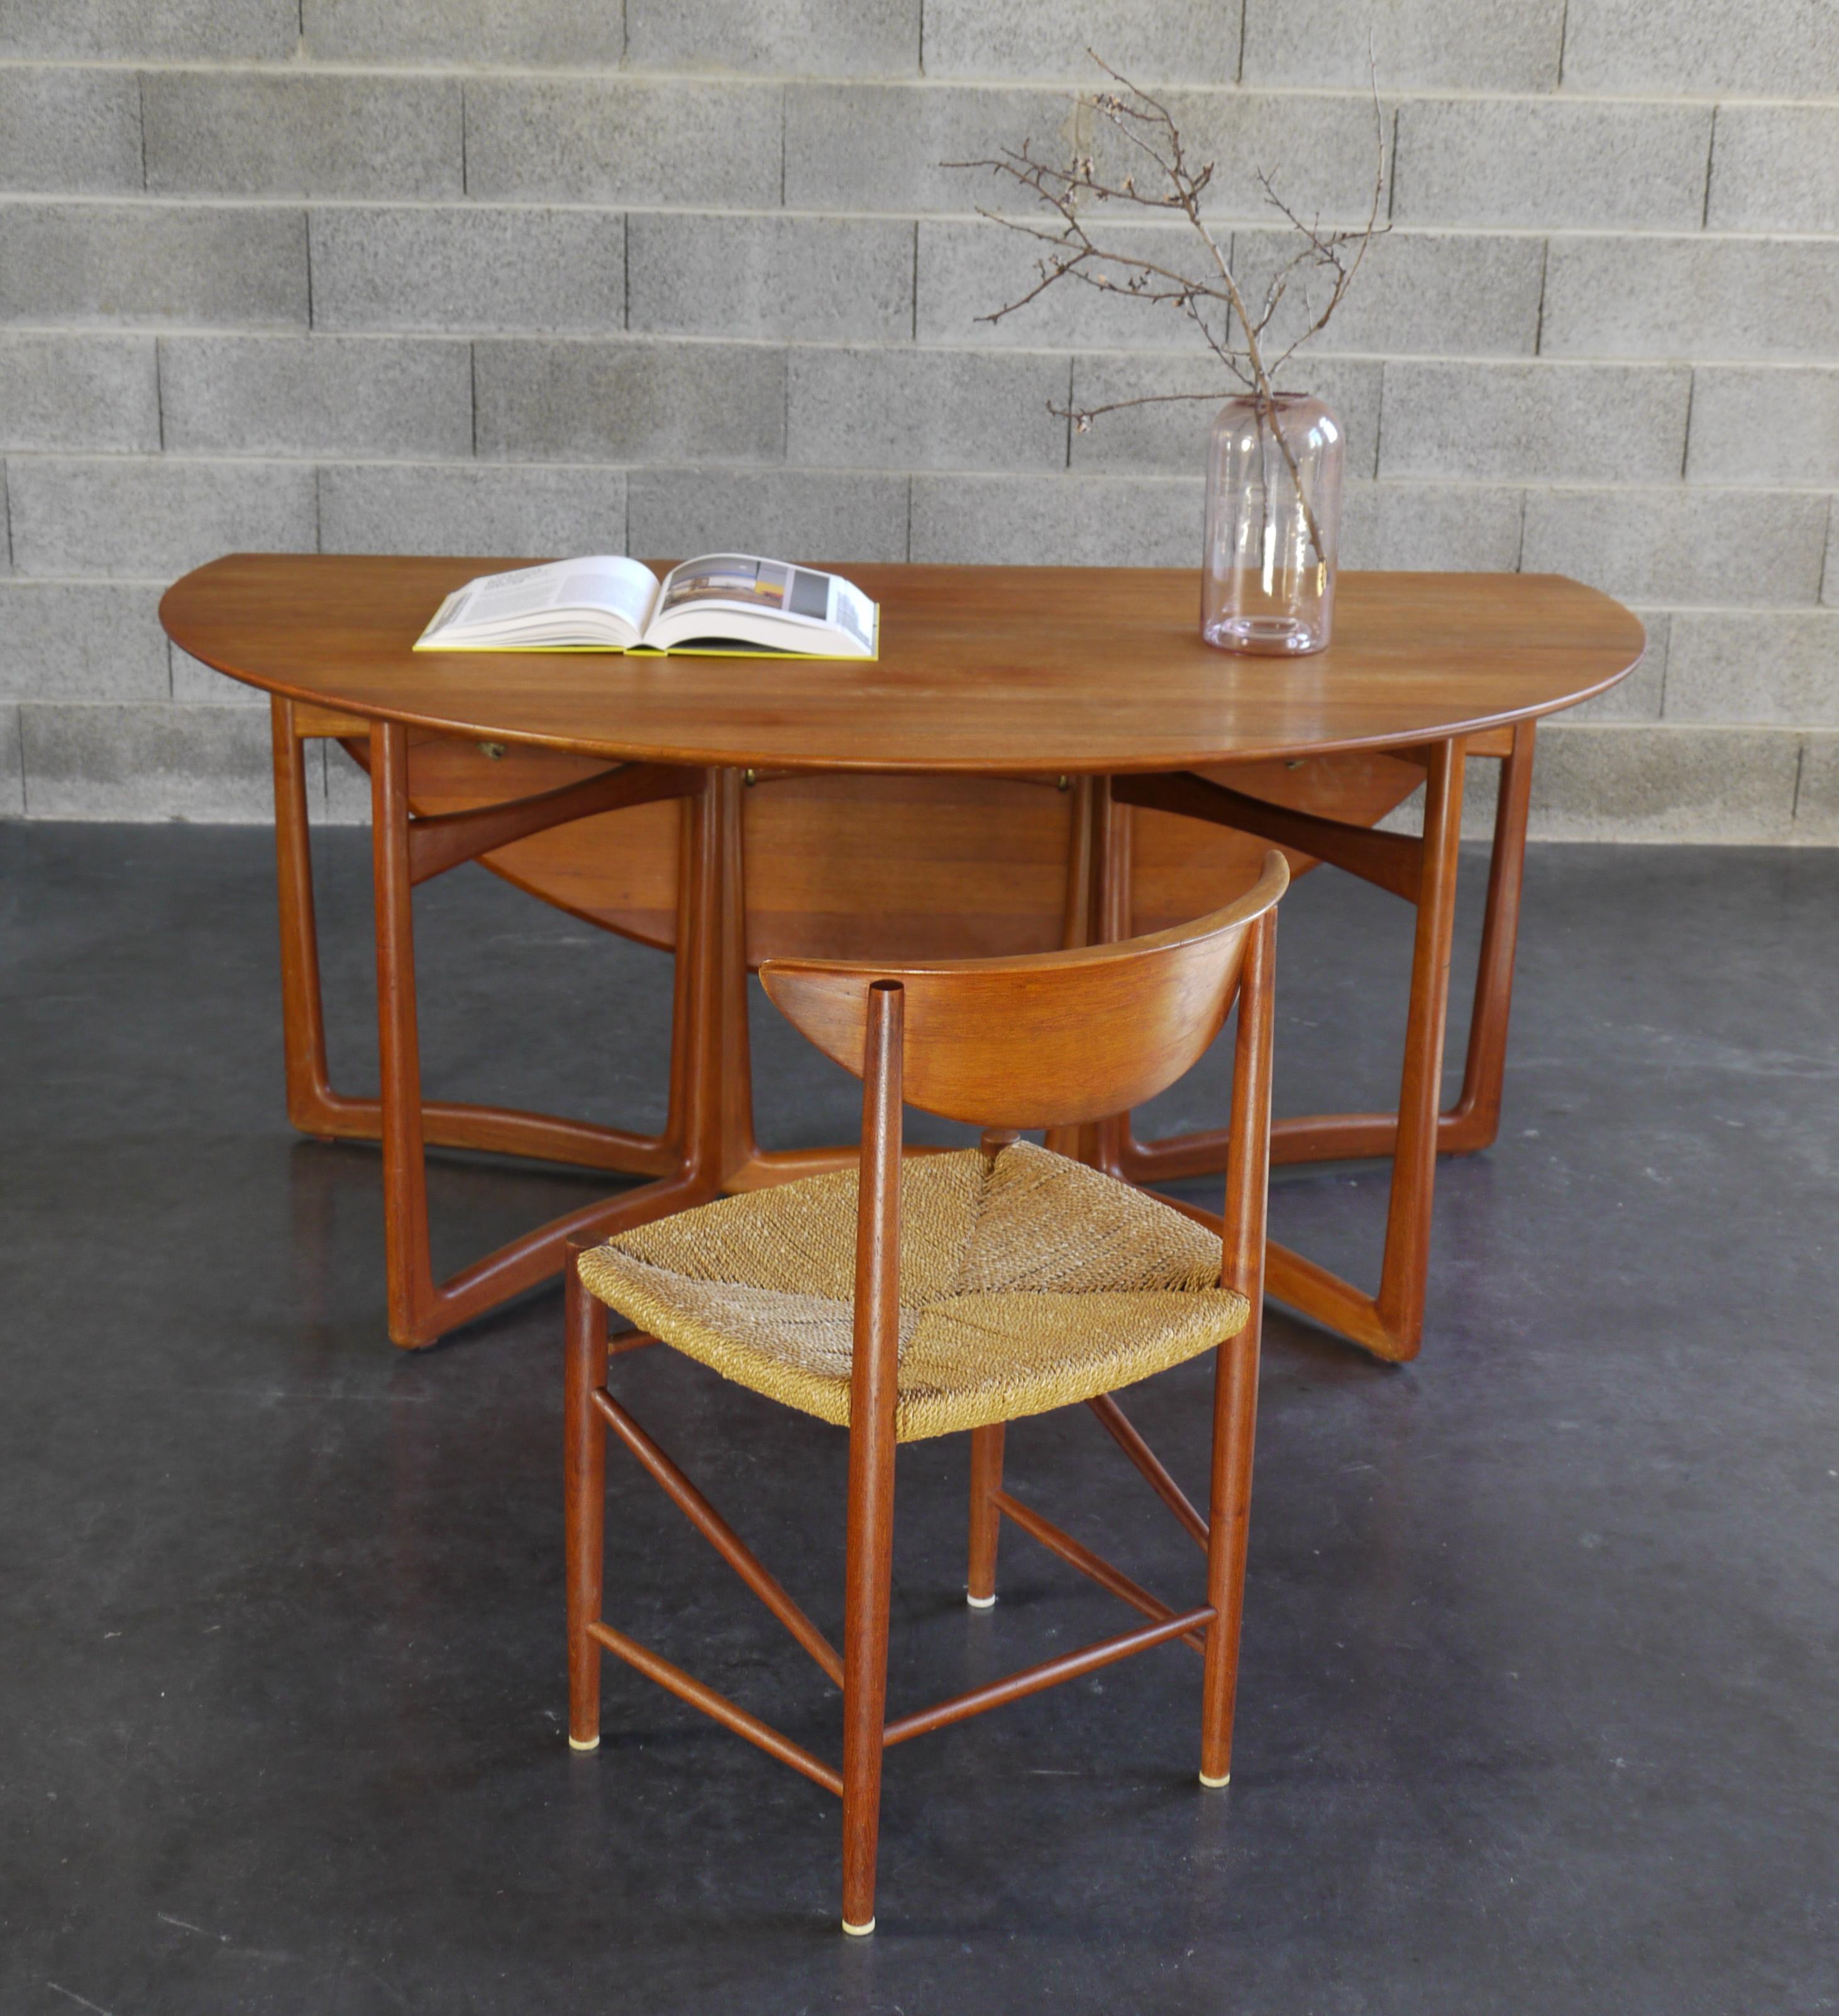 20th Century Teak Gateleg Dining Table by Hvidt & Mølgaard-Nielsen France & Søn 1950s For Sale